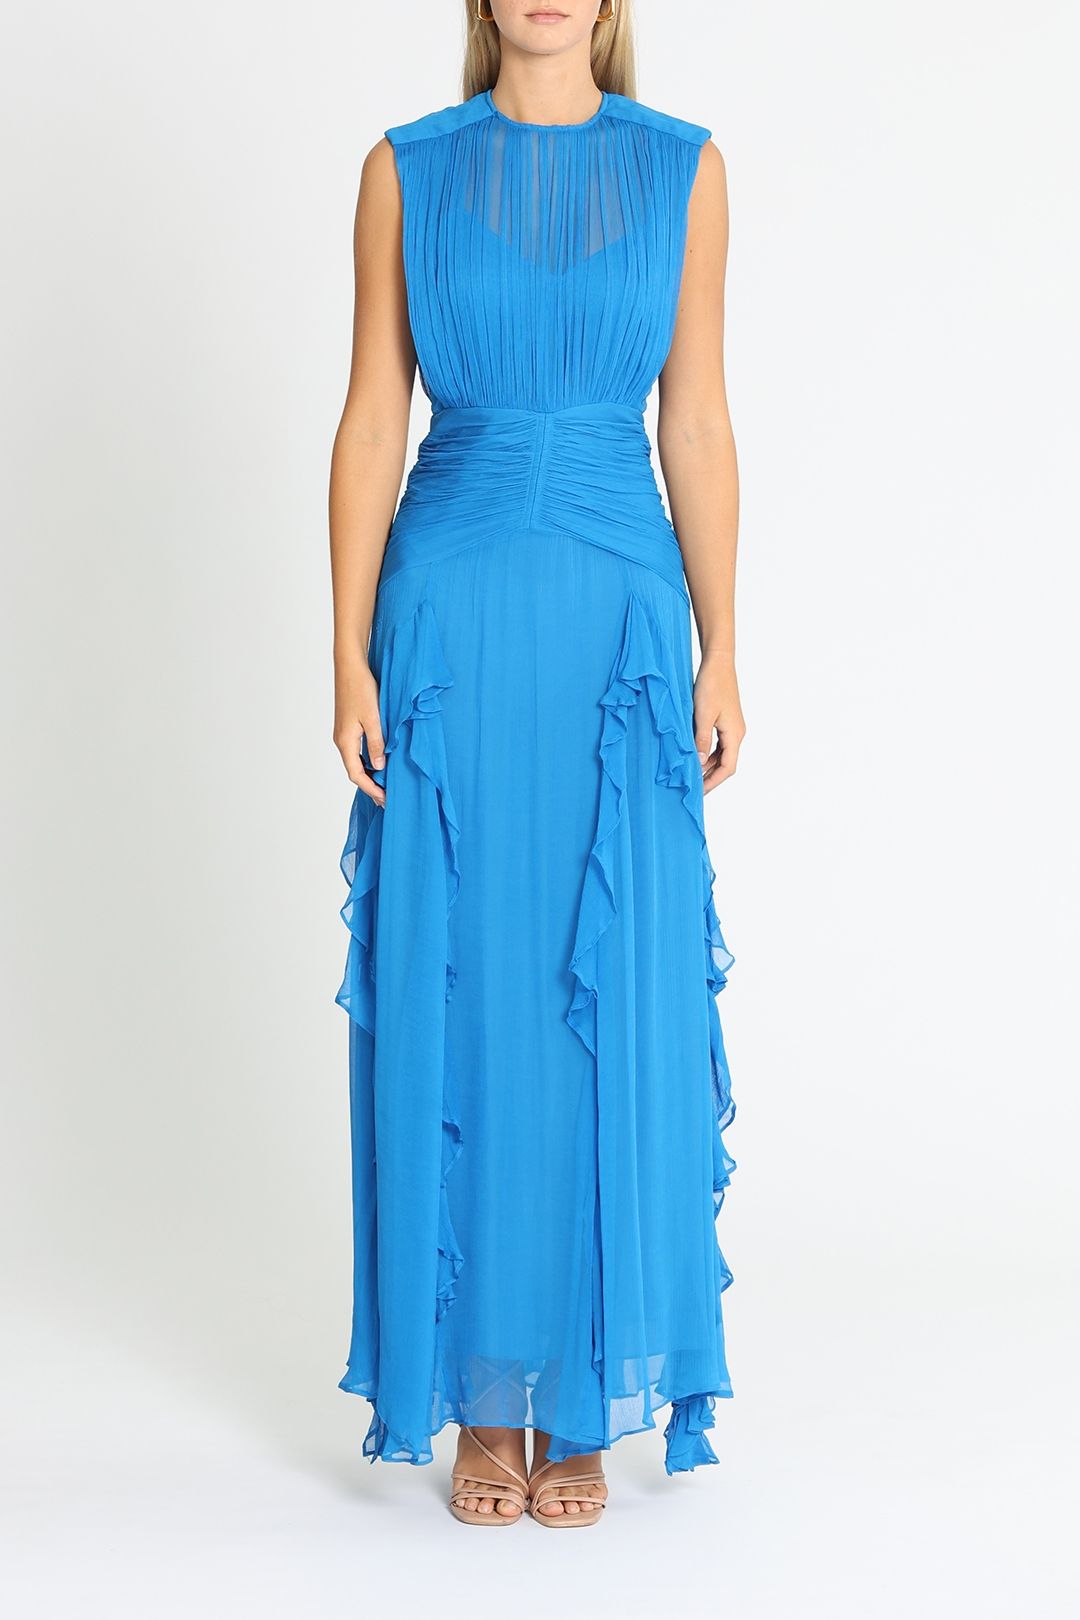 Shona Joy Leilani Sleeveless Maxi Dress Blue